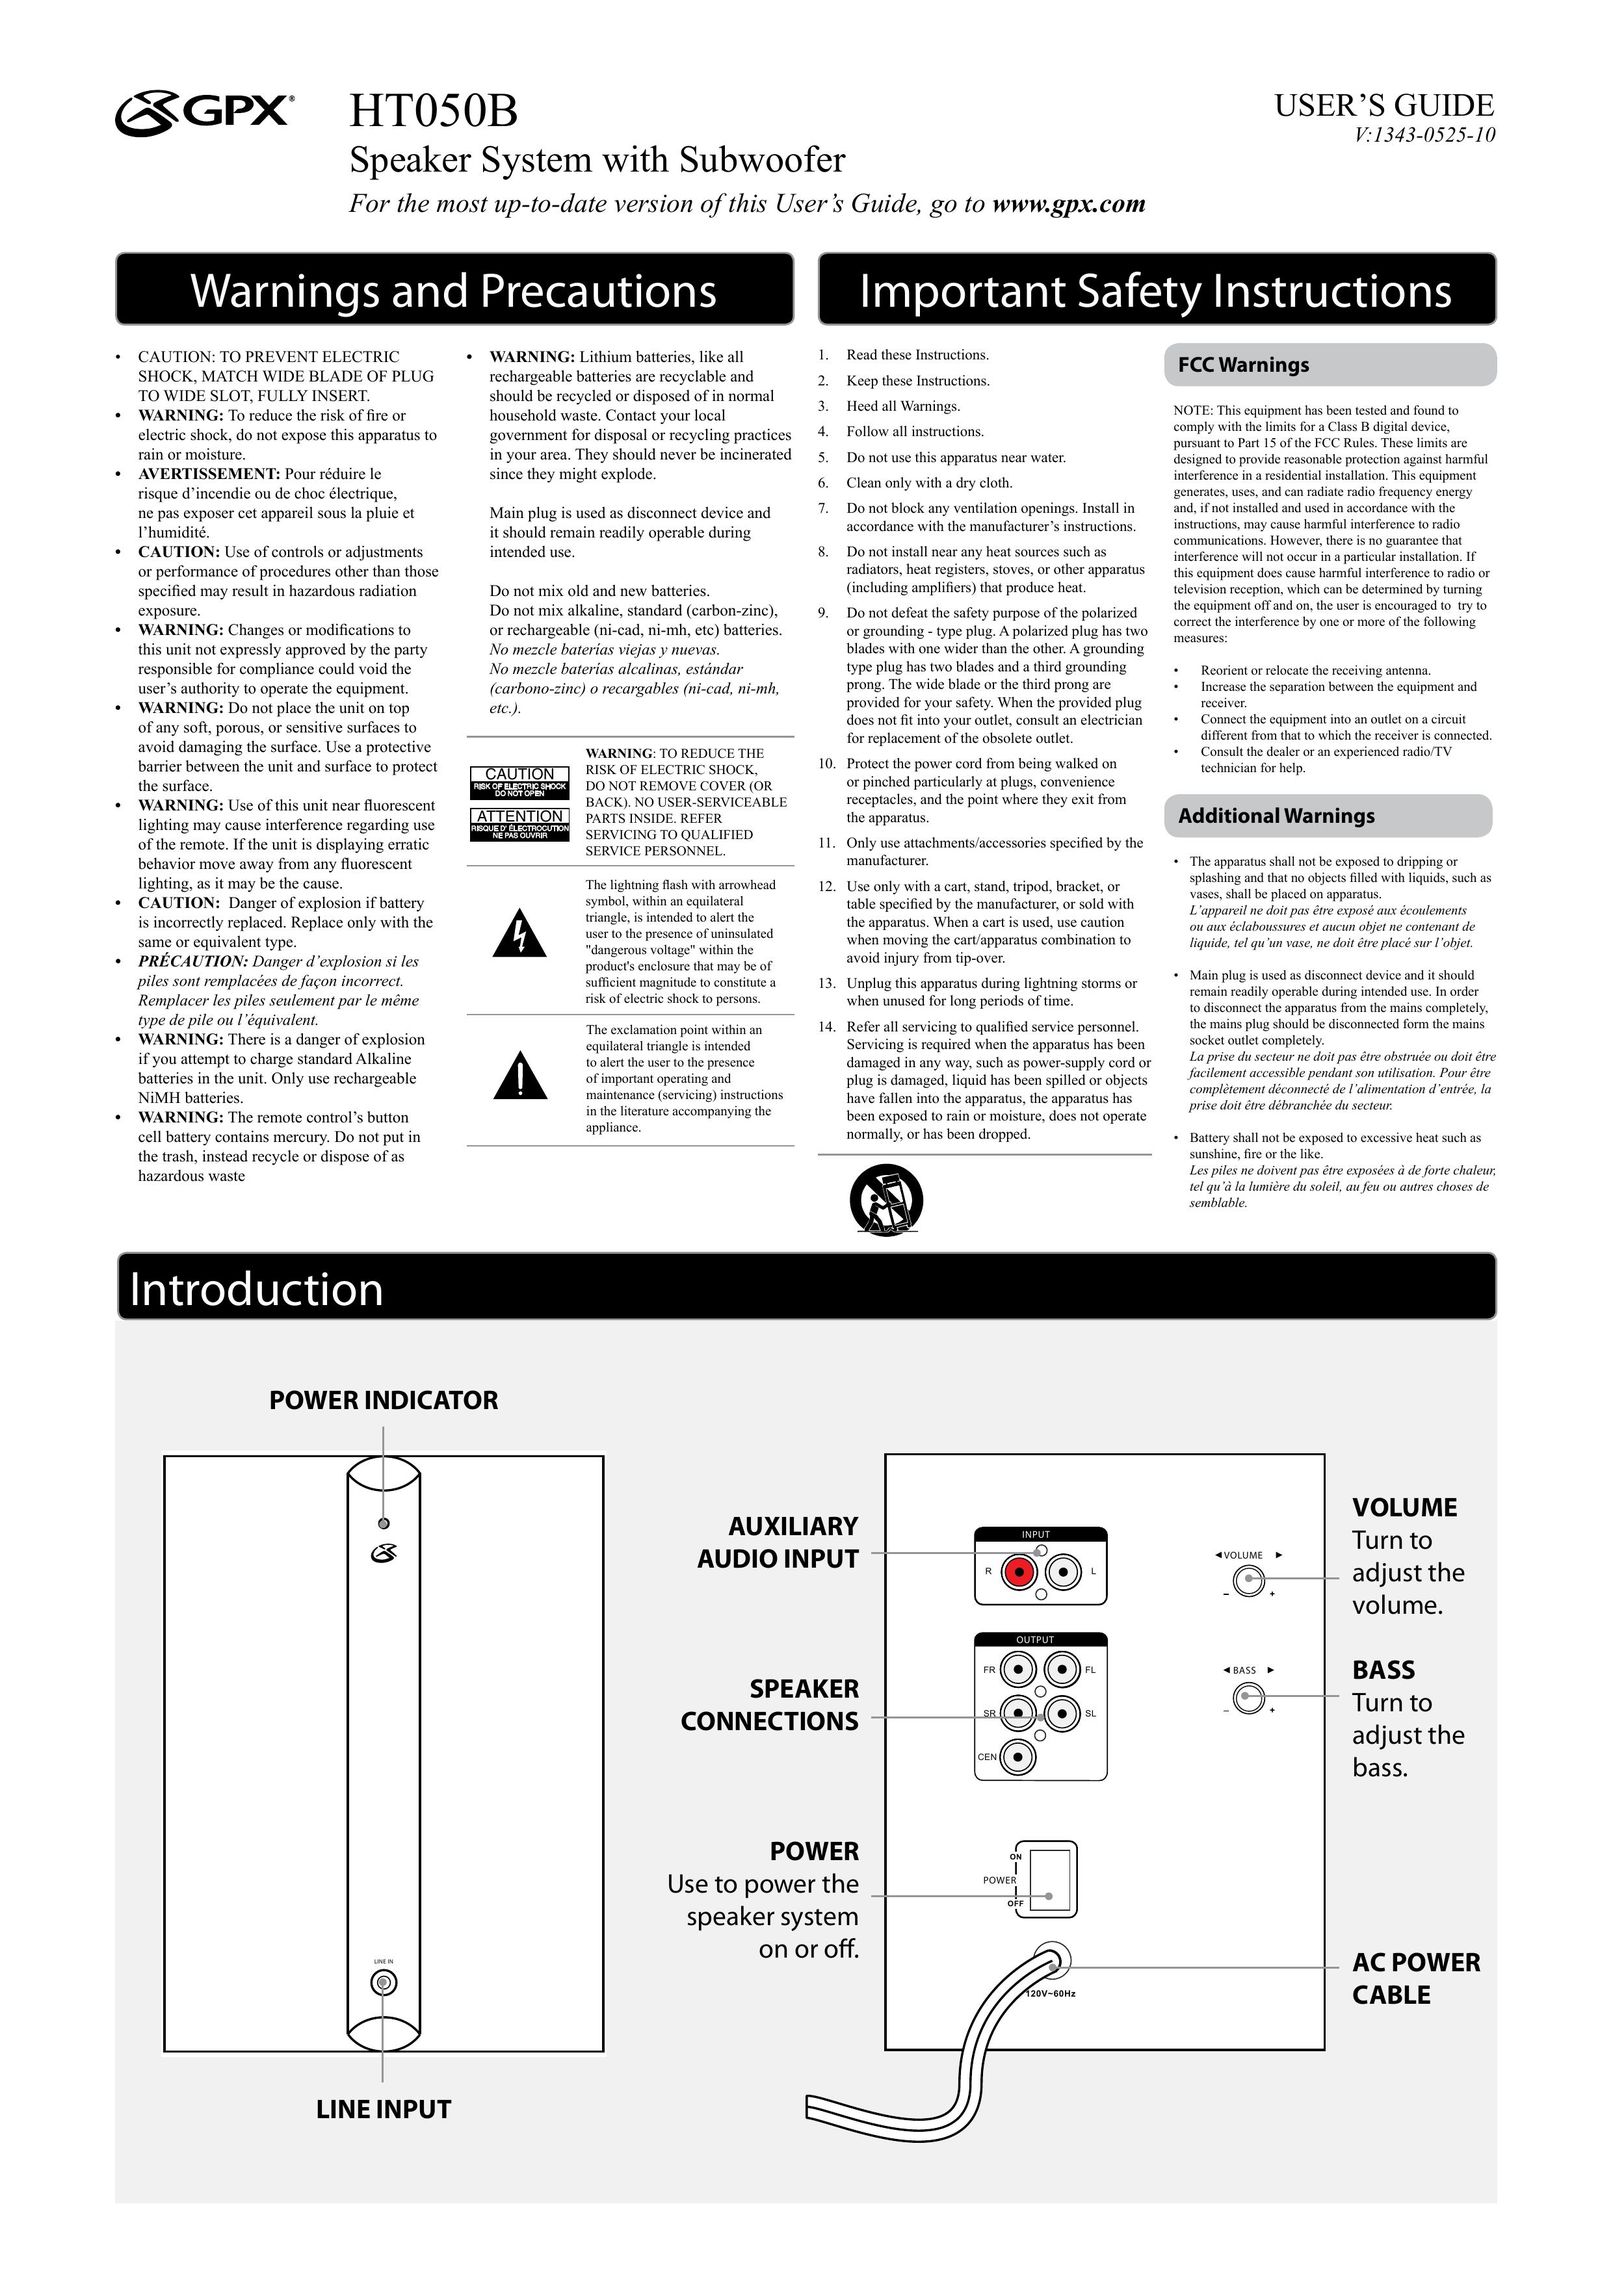 GPX HT050B Speaker System User Manual